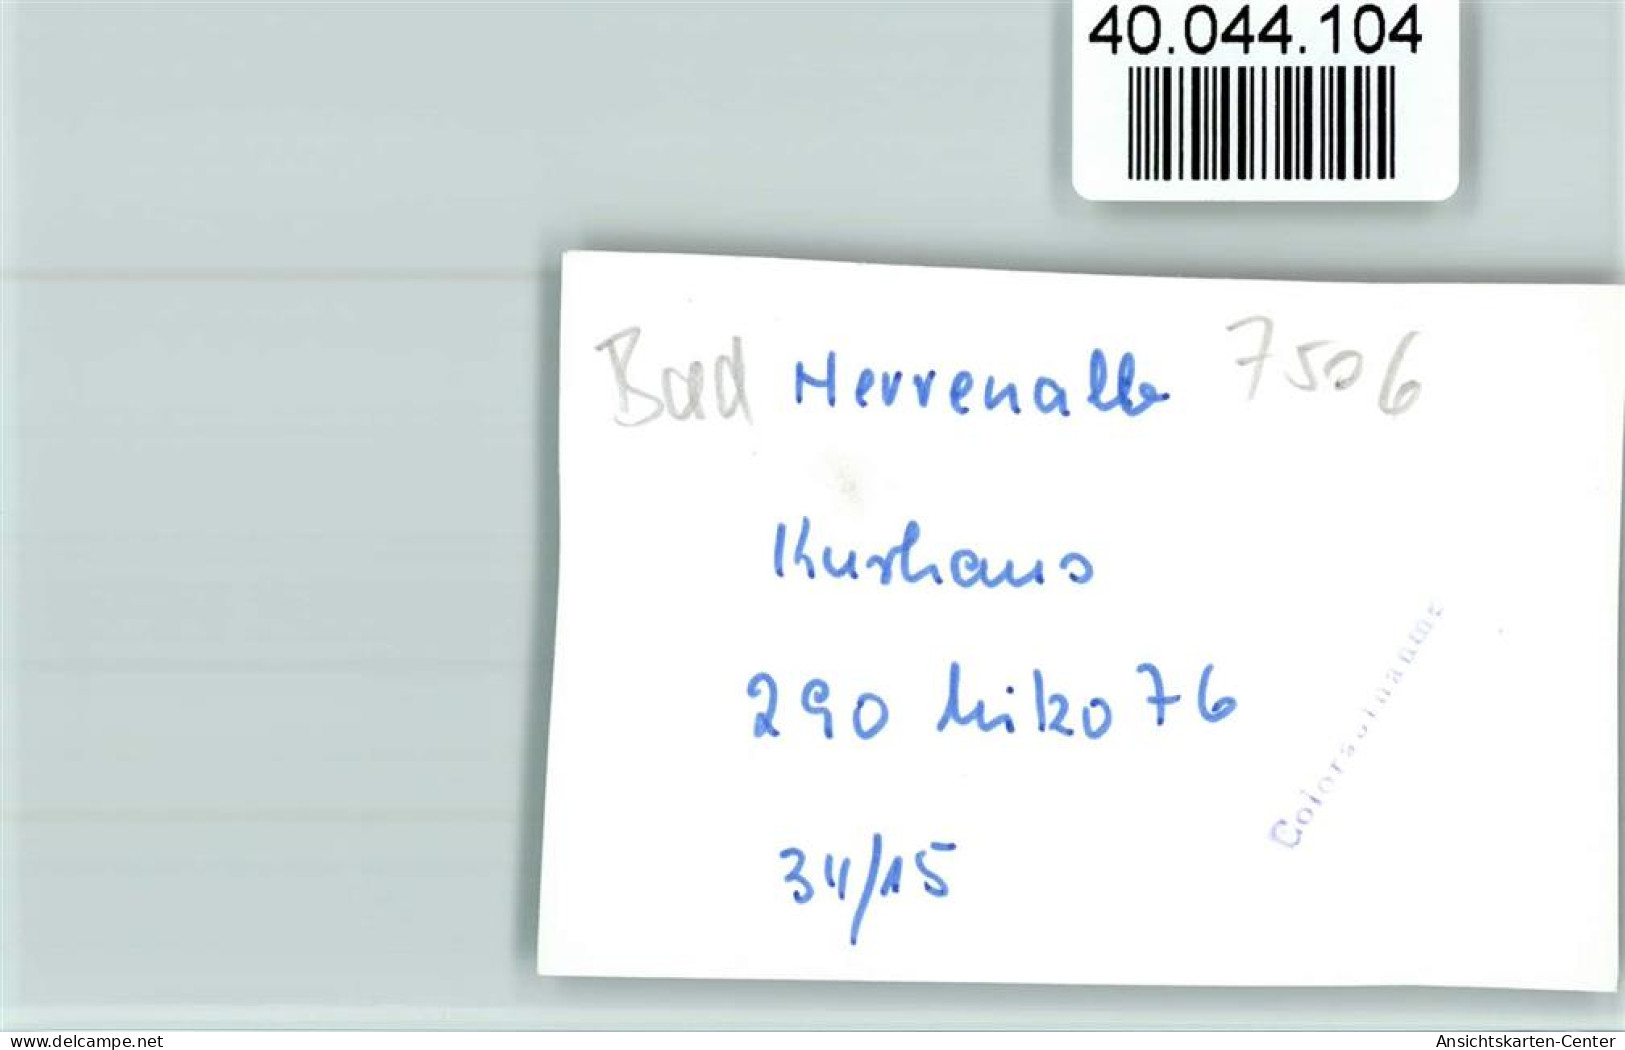 40044104 - Bad Herrenalb - Bad Herrenalb